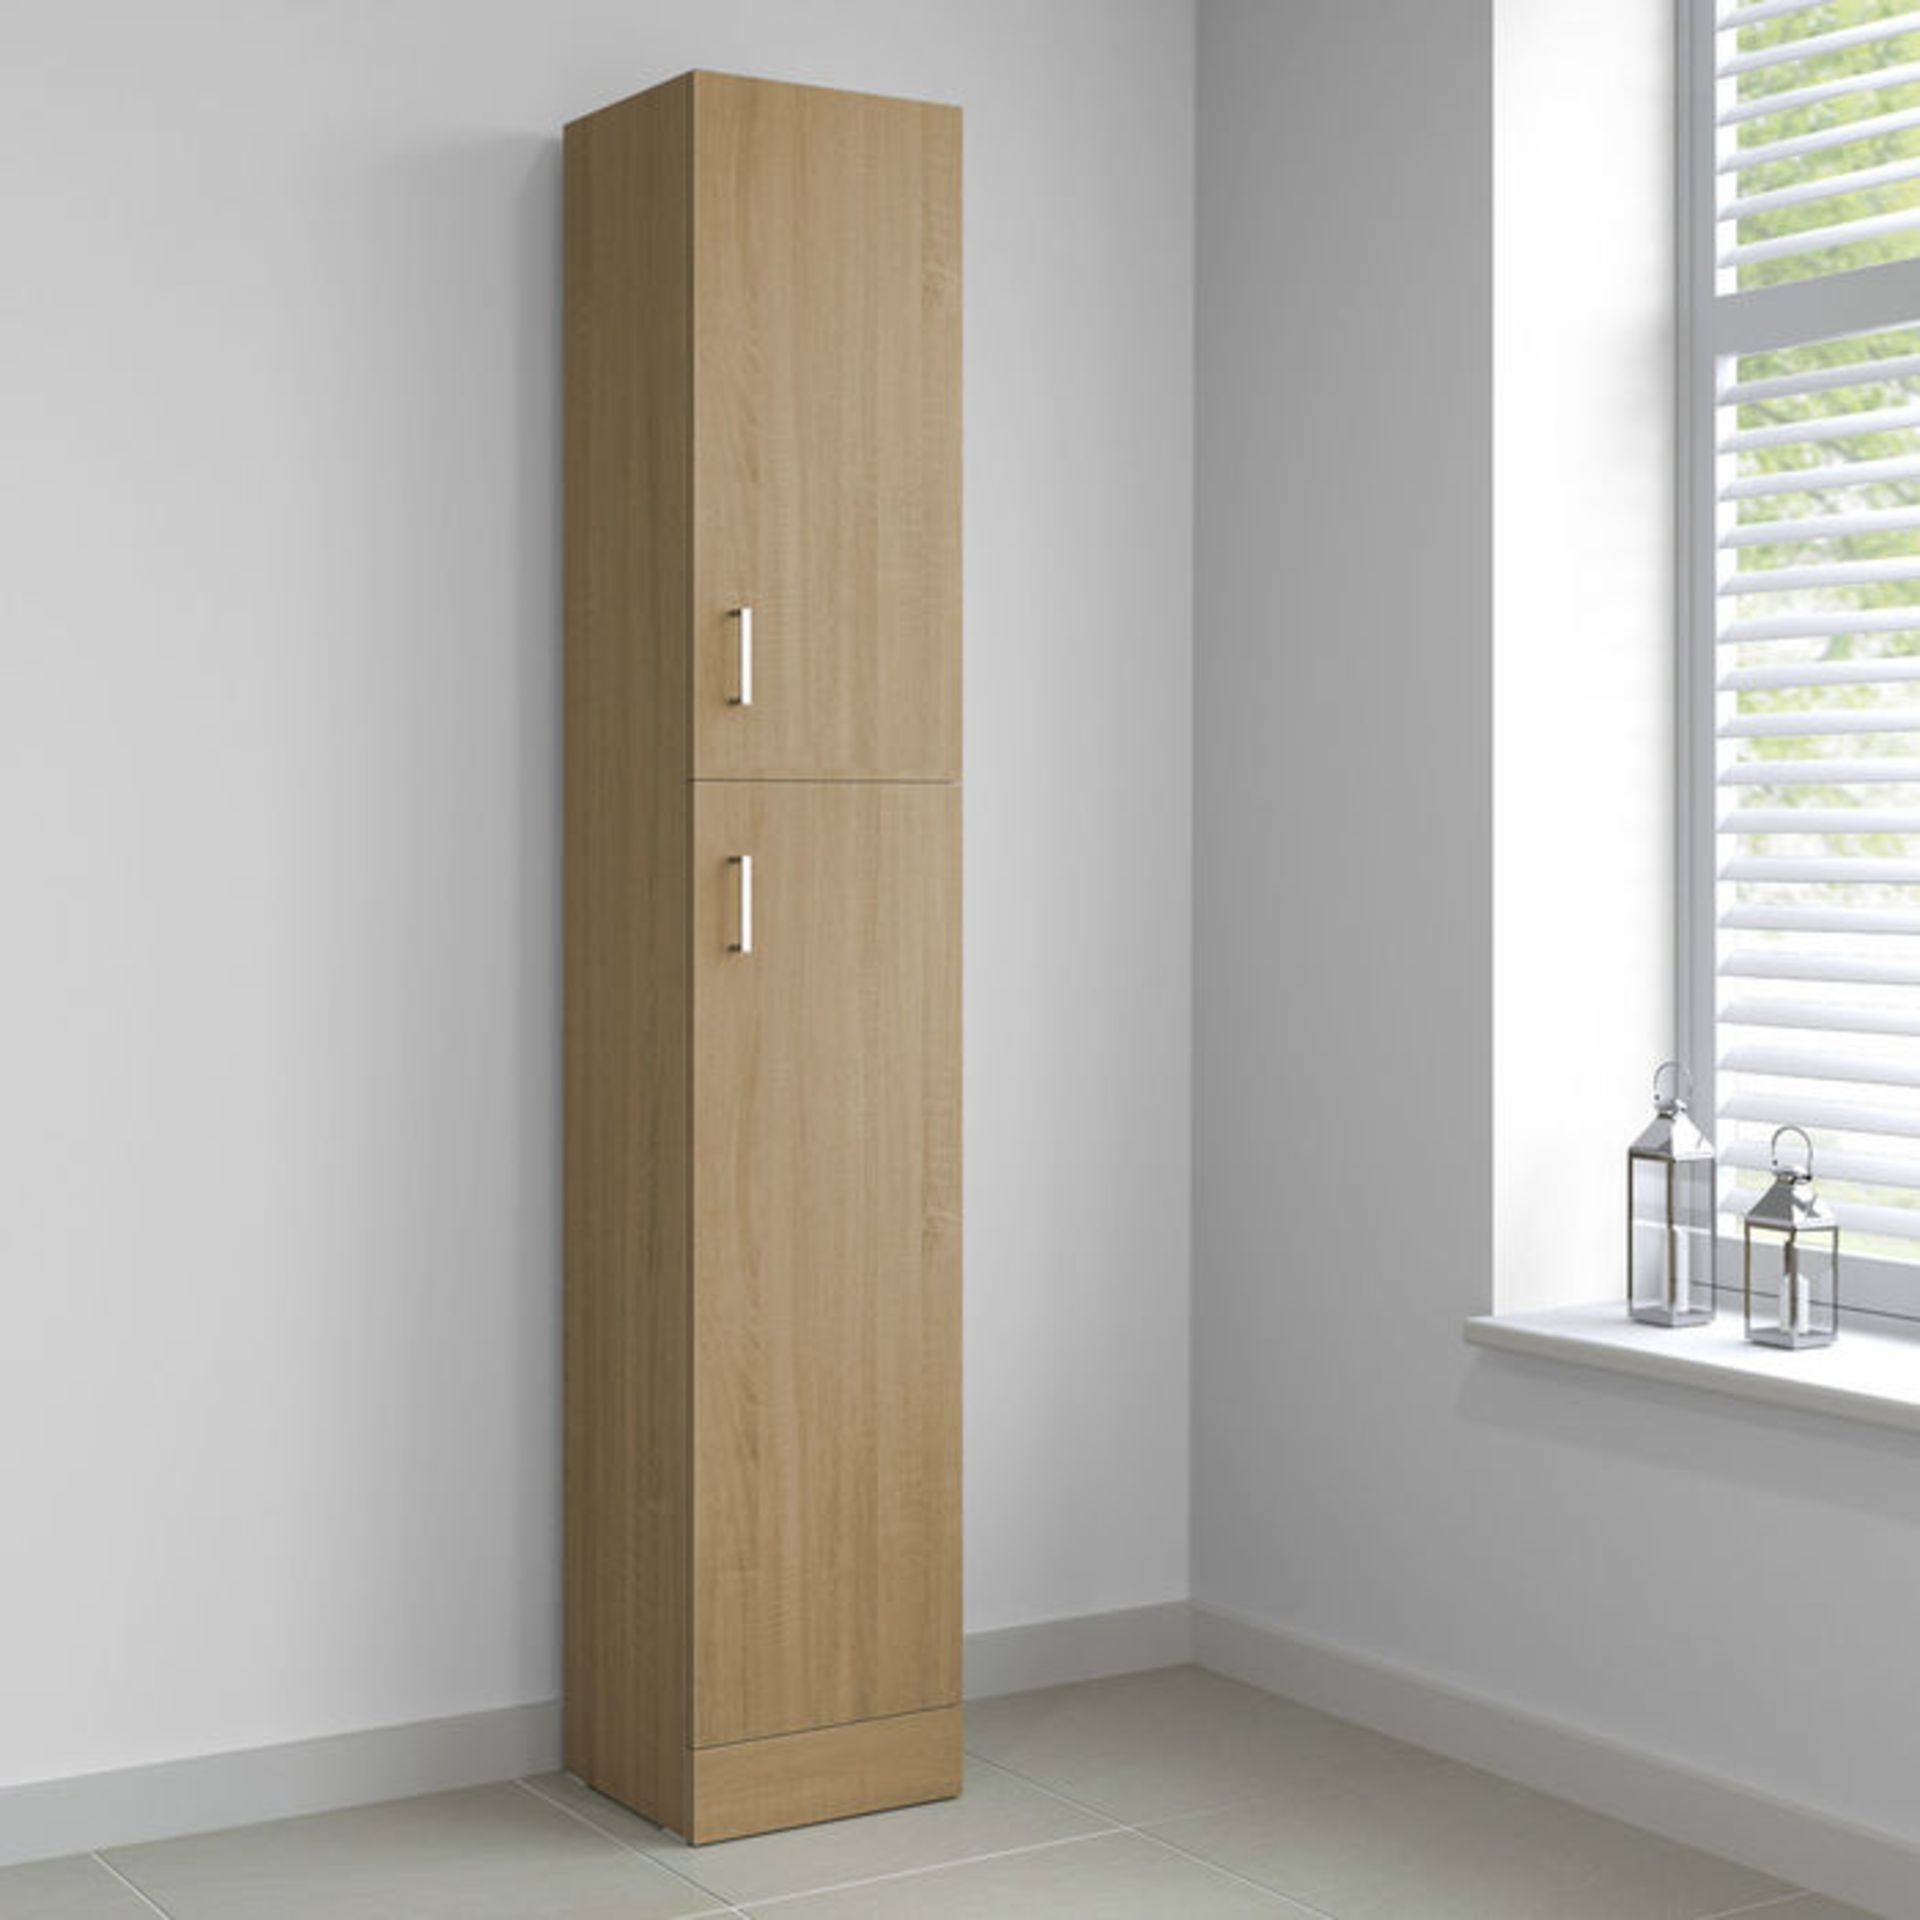 (KL33) 1900x300mm Quartz Oak Effect Tall Storage Cabinet - Floor Standing. Oak effect finish - Image 2 of 4